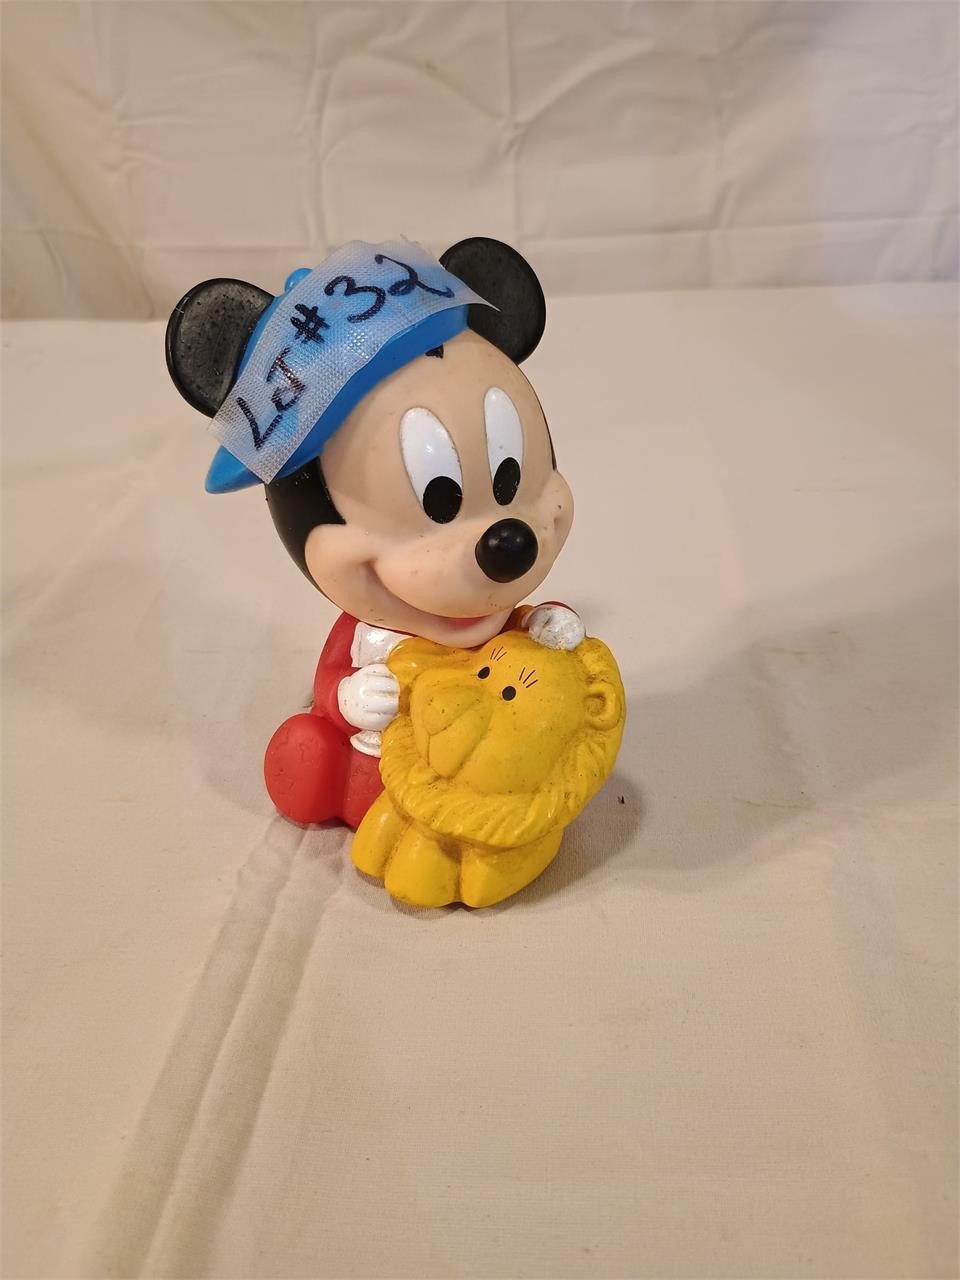 Disney's Baby Mickey Squeaky Toy